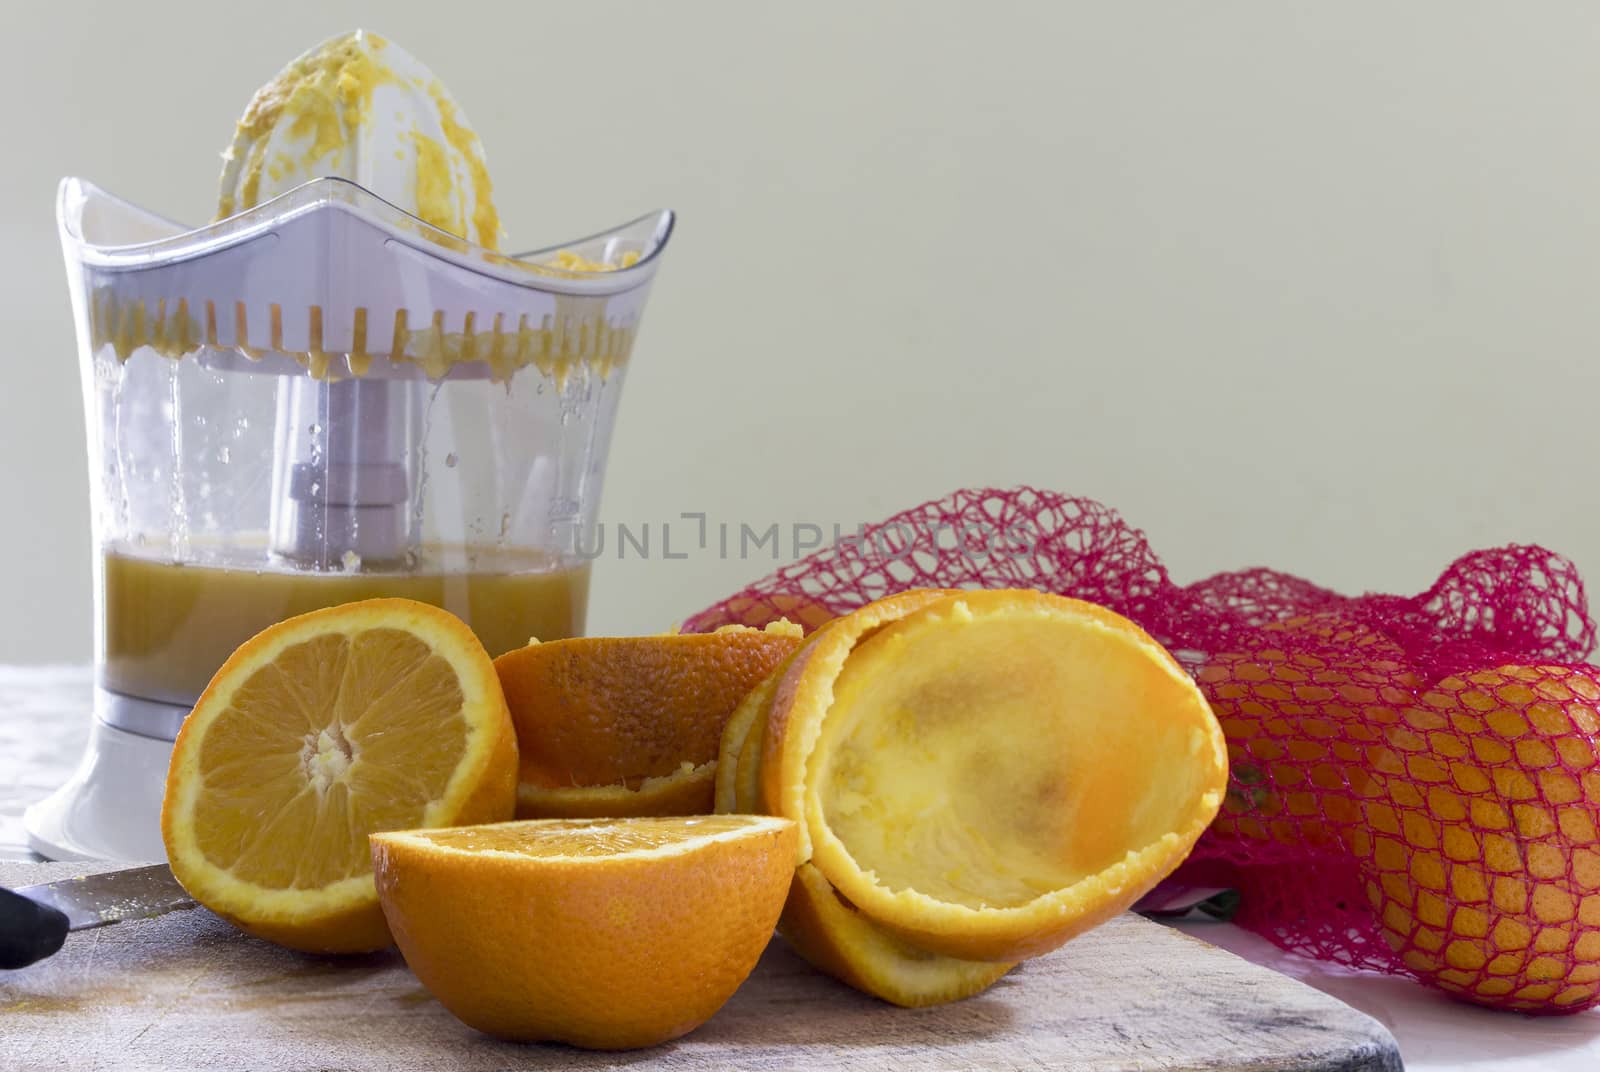 Orange juice, juicer and orange fruits on the table